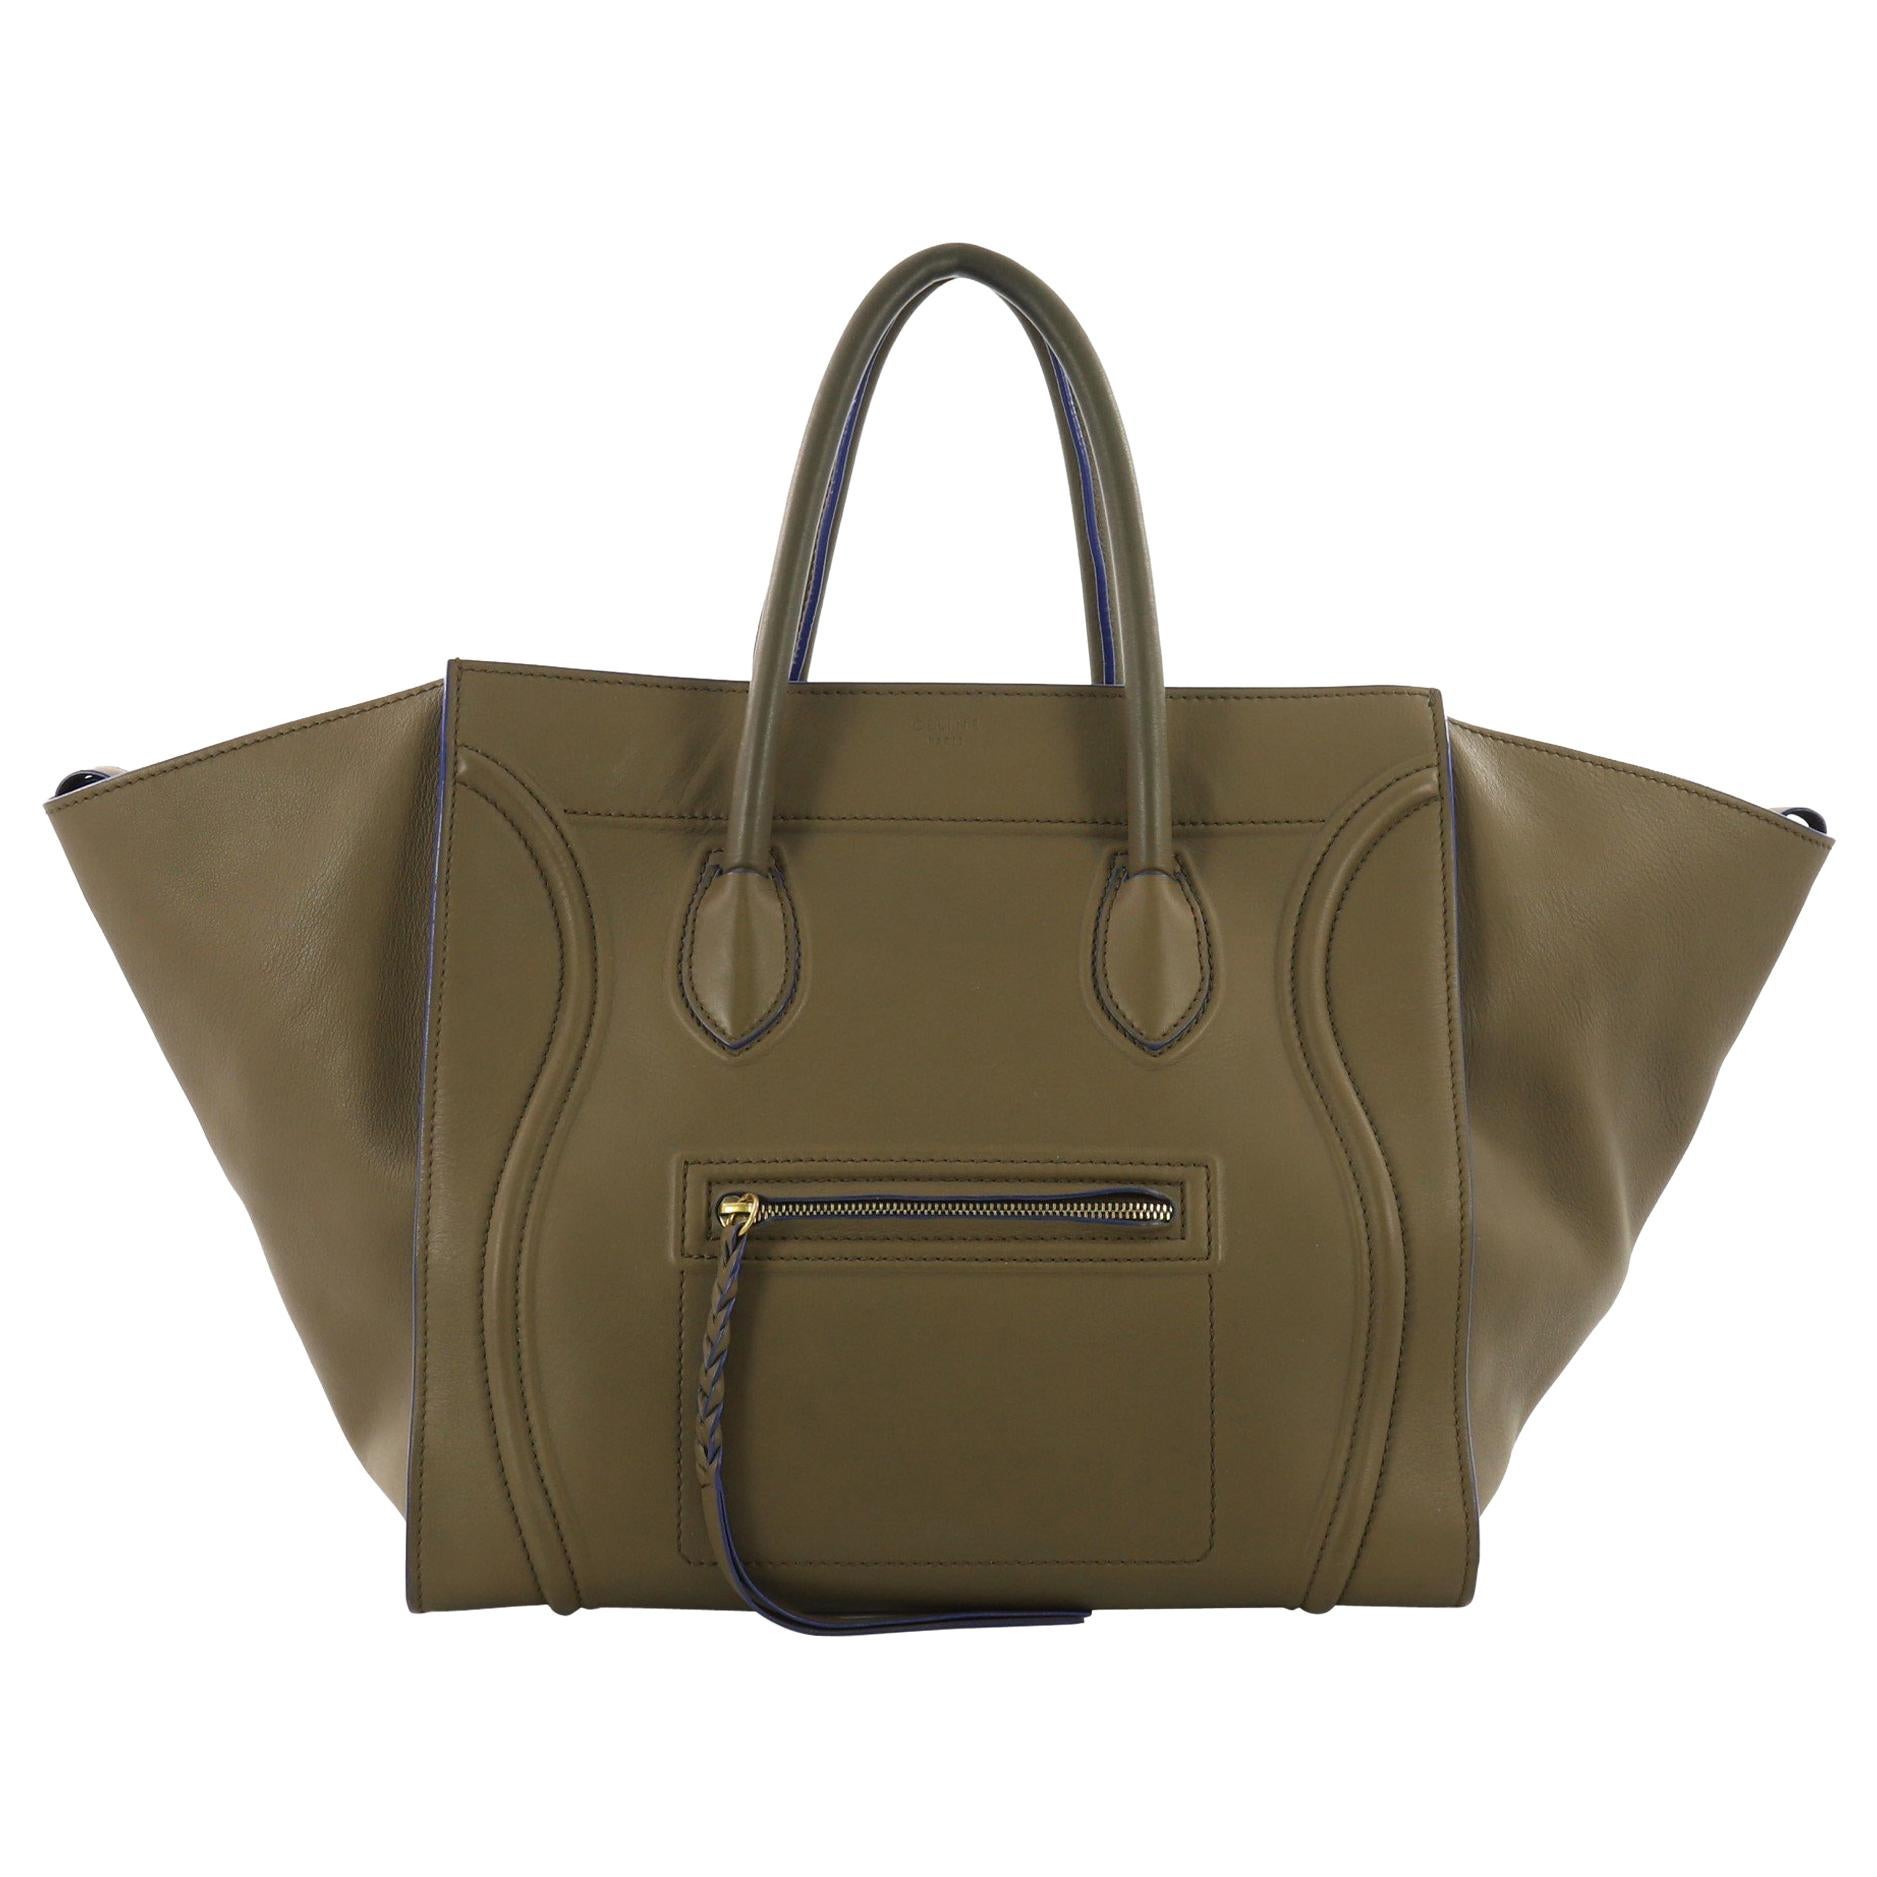  Celine Phantom Handbag Smooth Leather Large